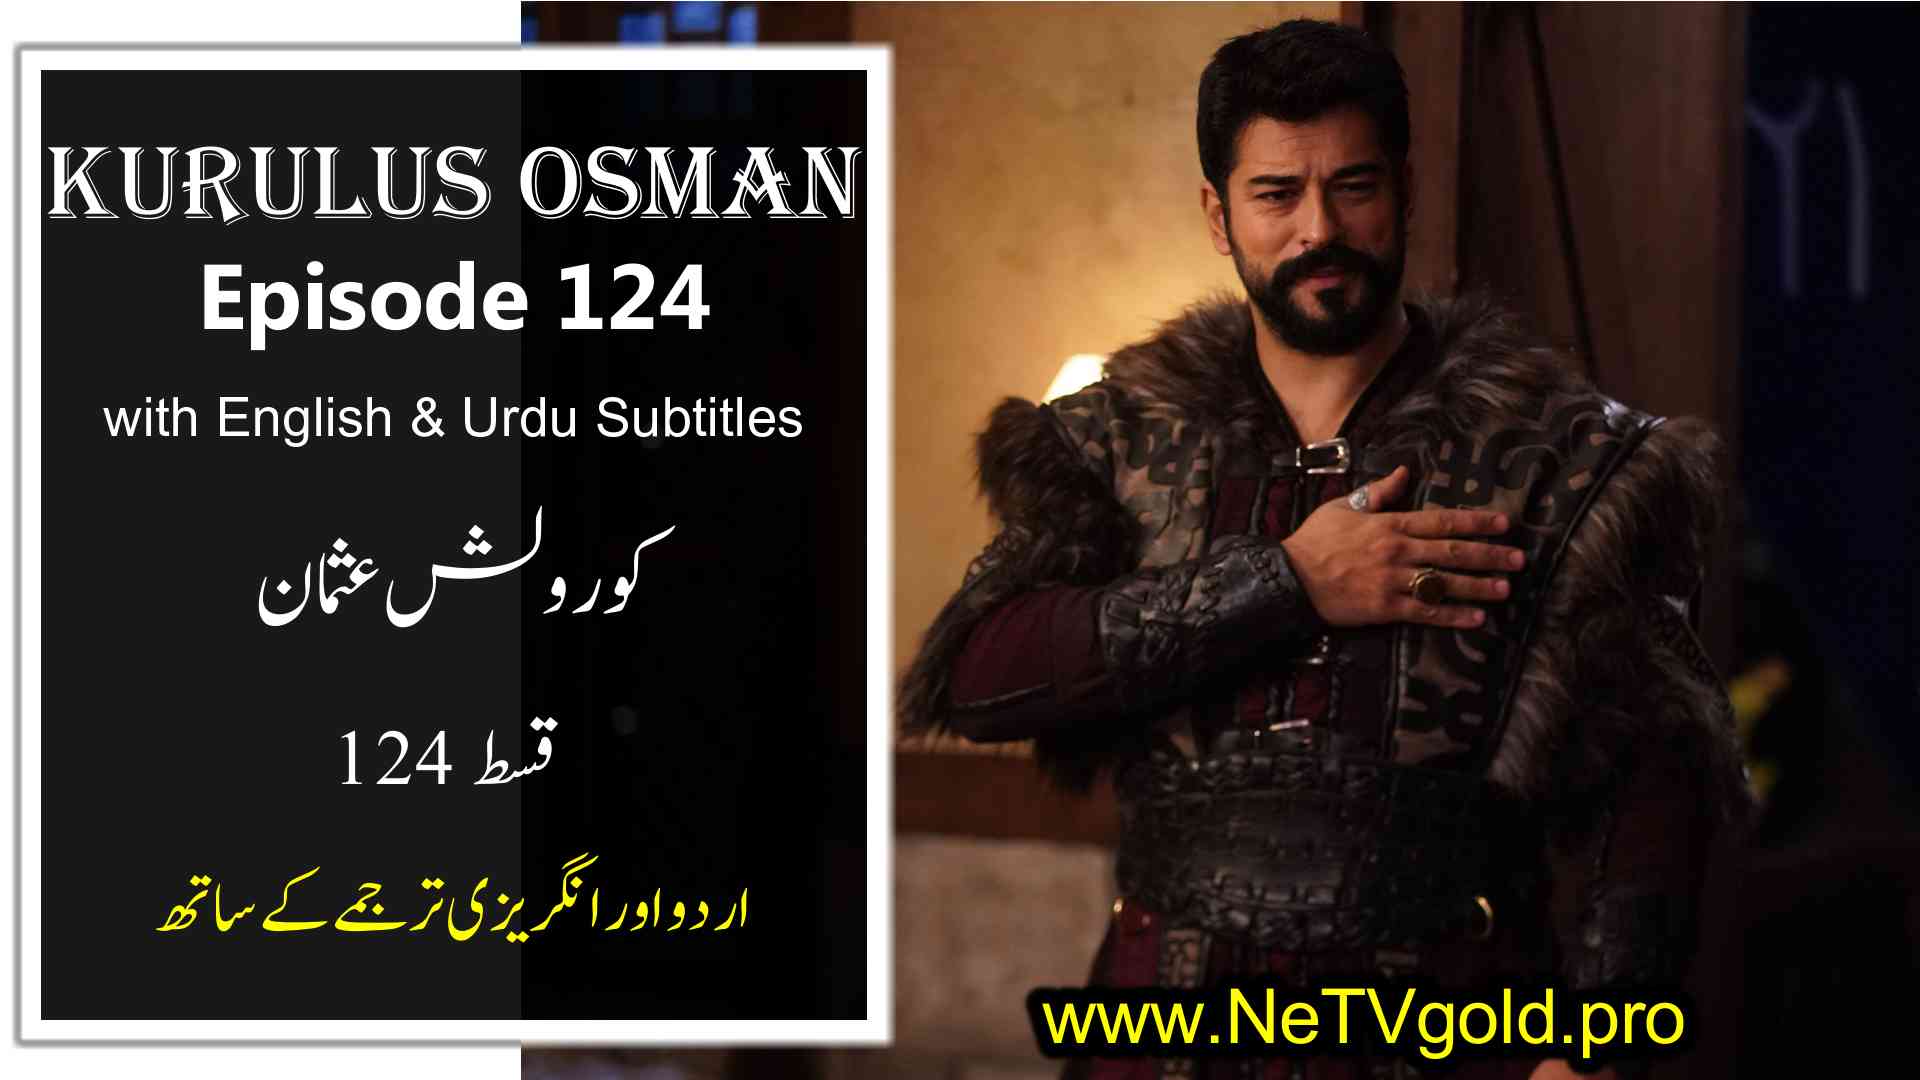 Kurulus Osman Episode 124 Urdu and English Subtitles